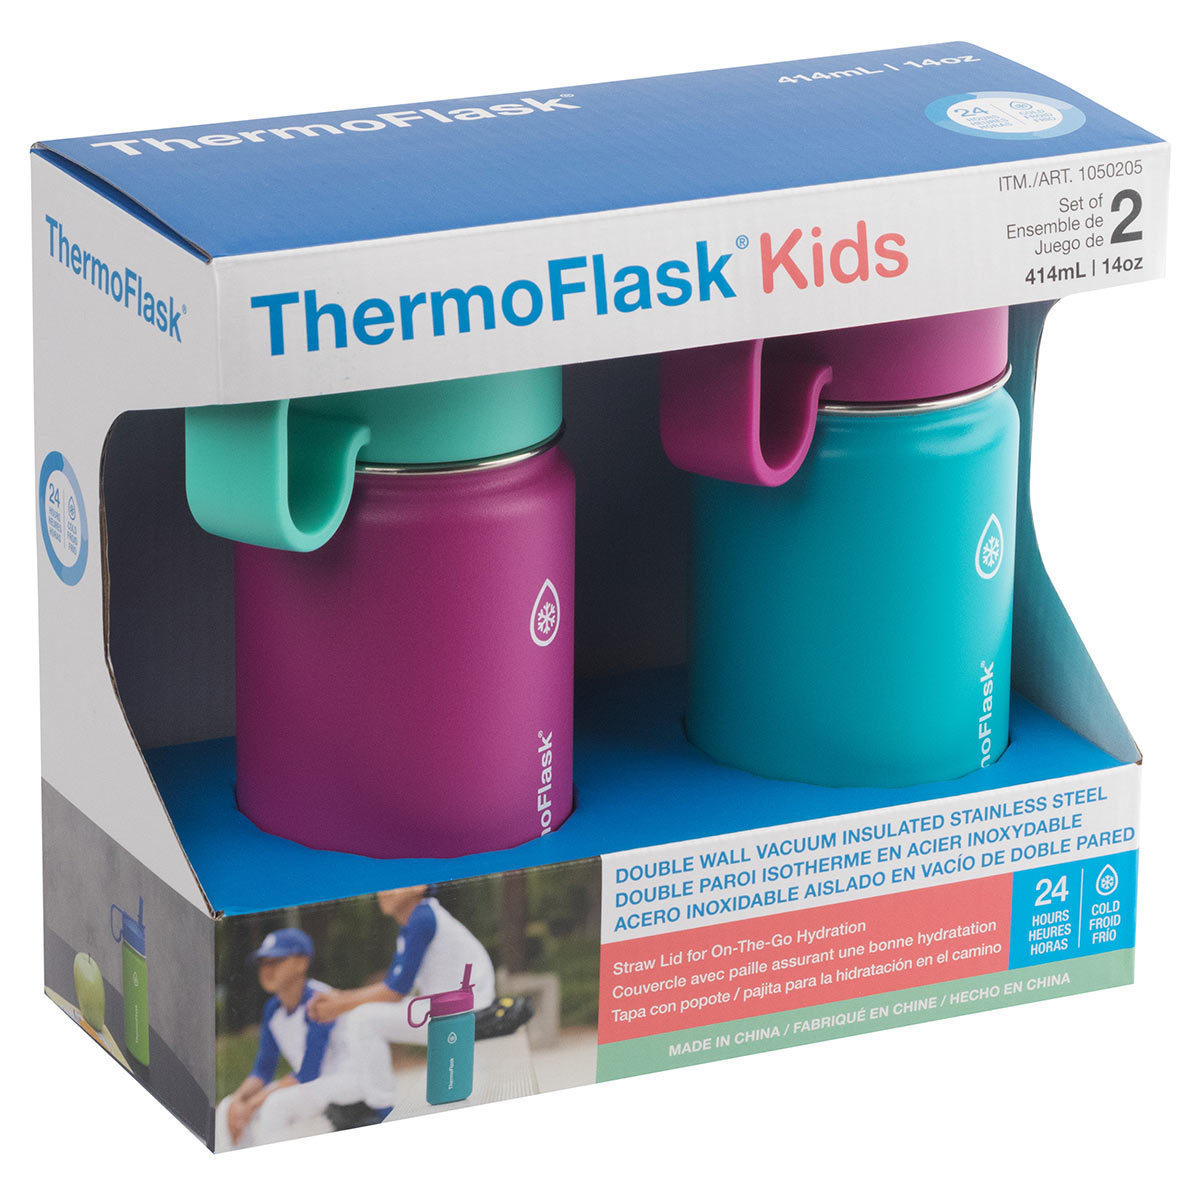 thermal flask costco